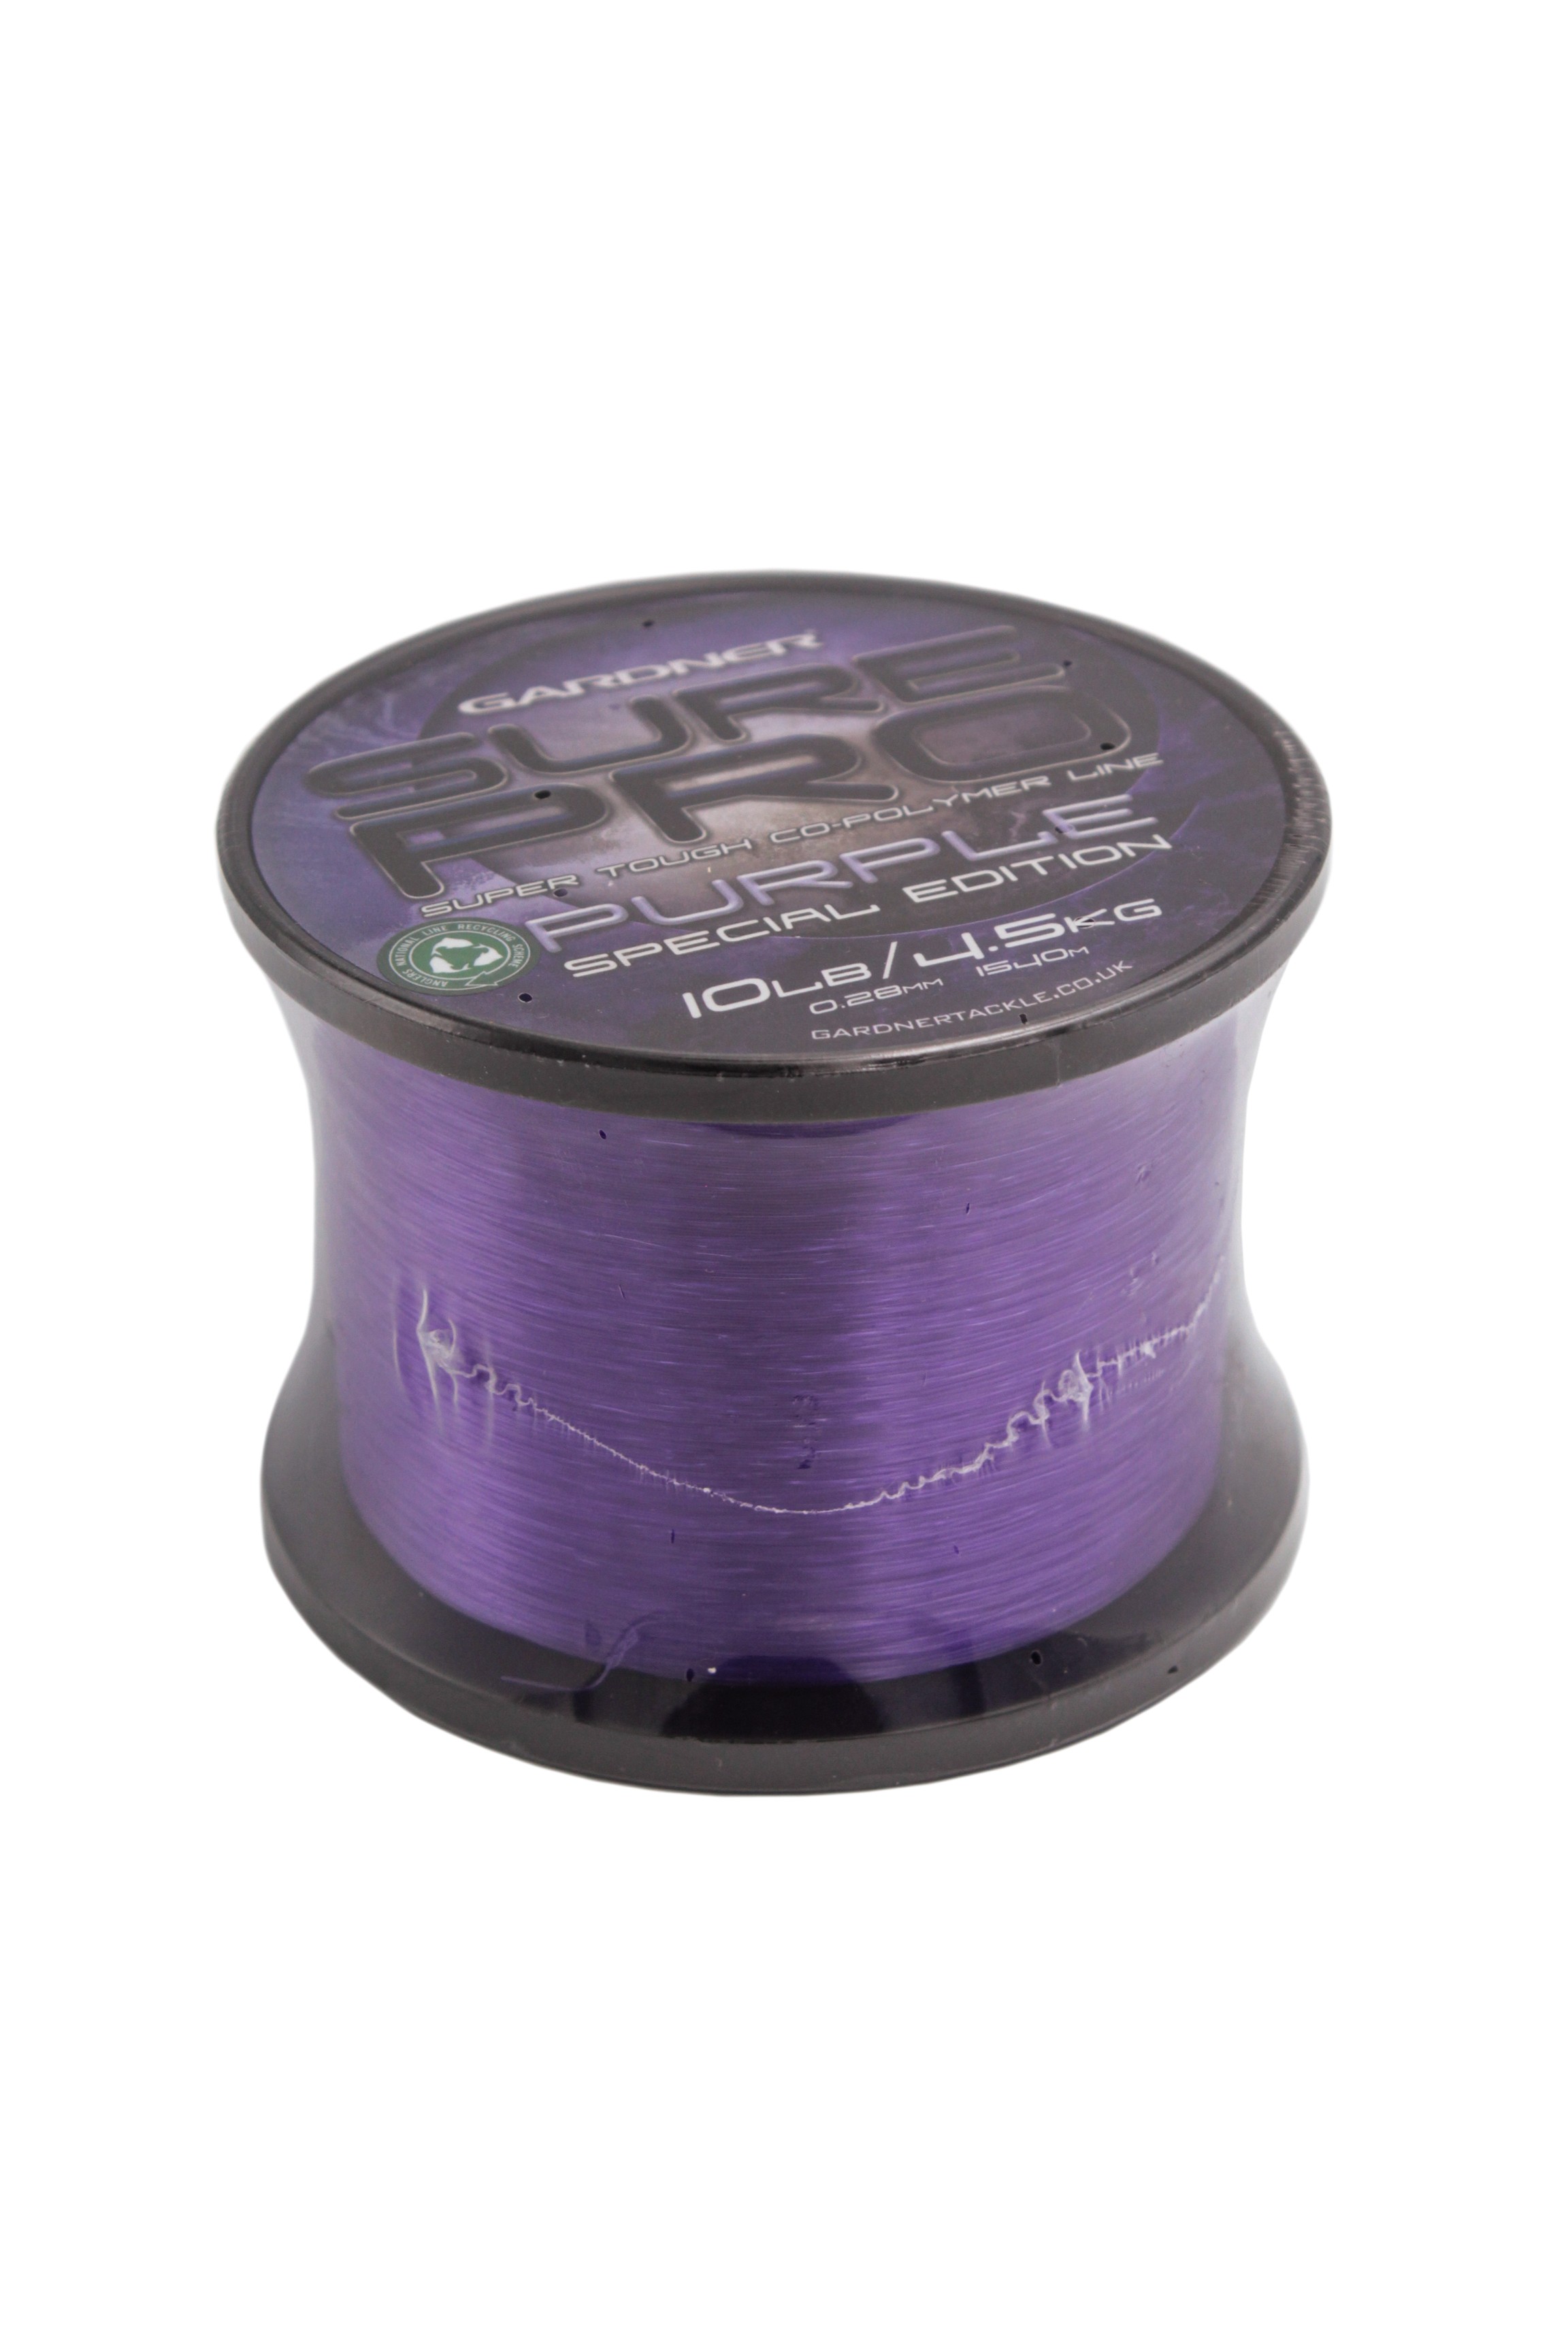 Леска Gardner Sure pro purple 10lb 0,28мм 1540м - фото 1